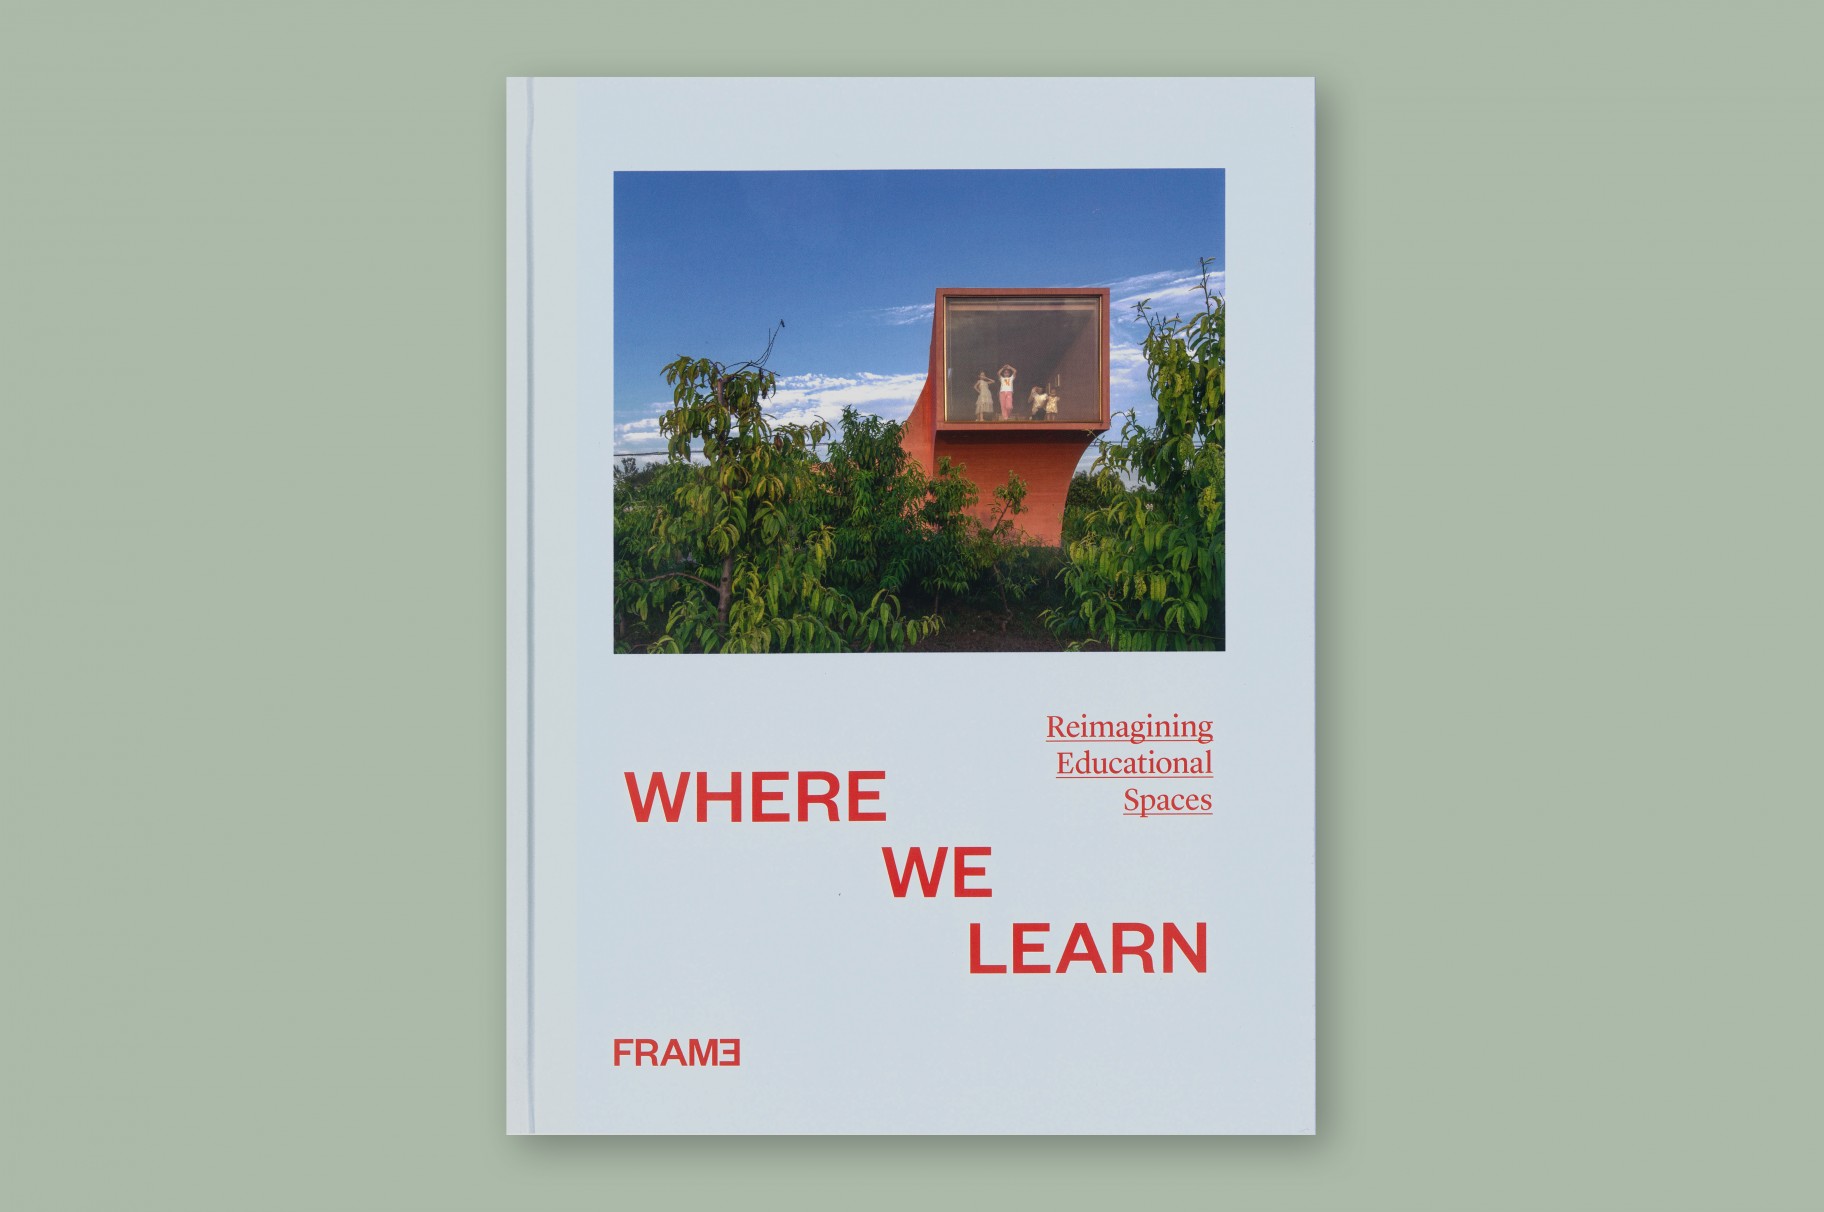 Kleuterschool Xaverius Borgerhout in boek 'When we learn' van FRAME